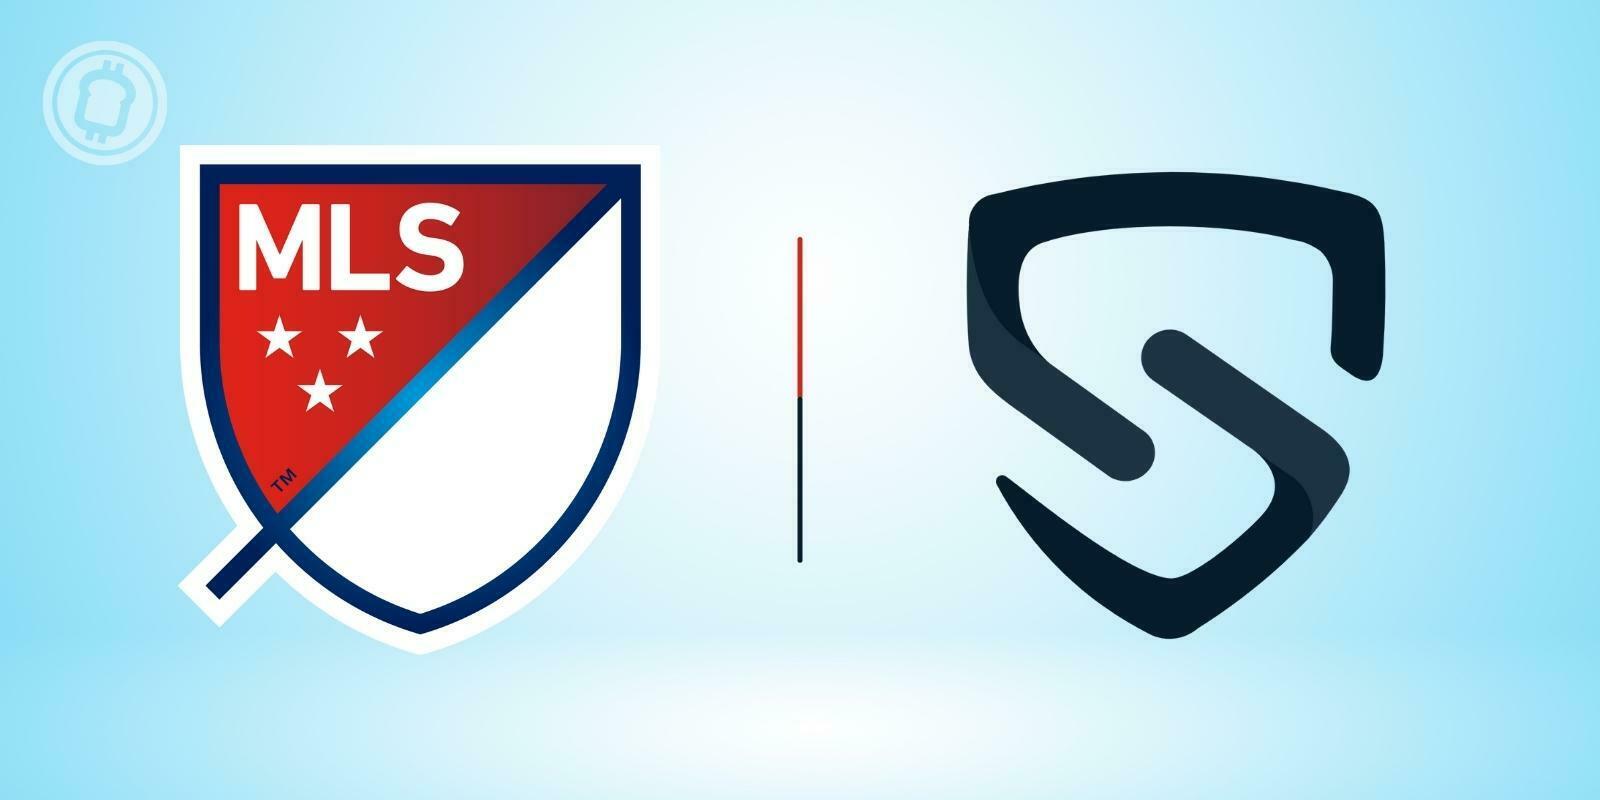 La Major League Soccer (MLS) s'associe avec la plateforme Socios.com